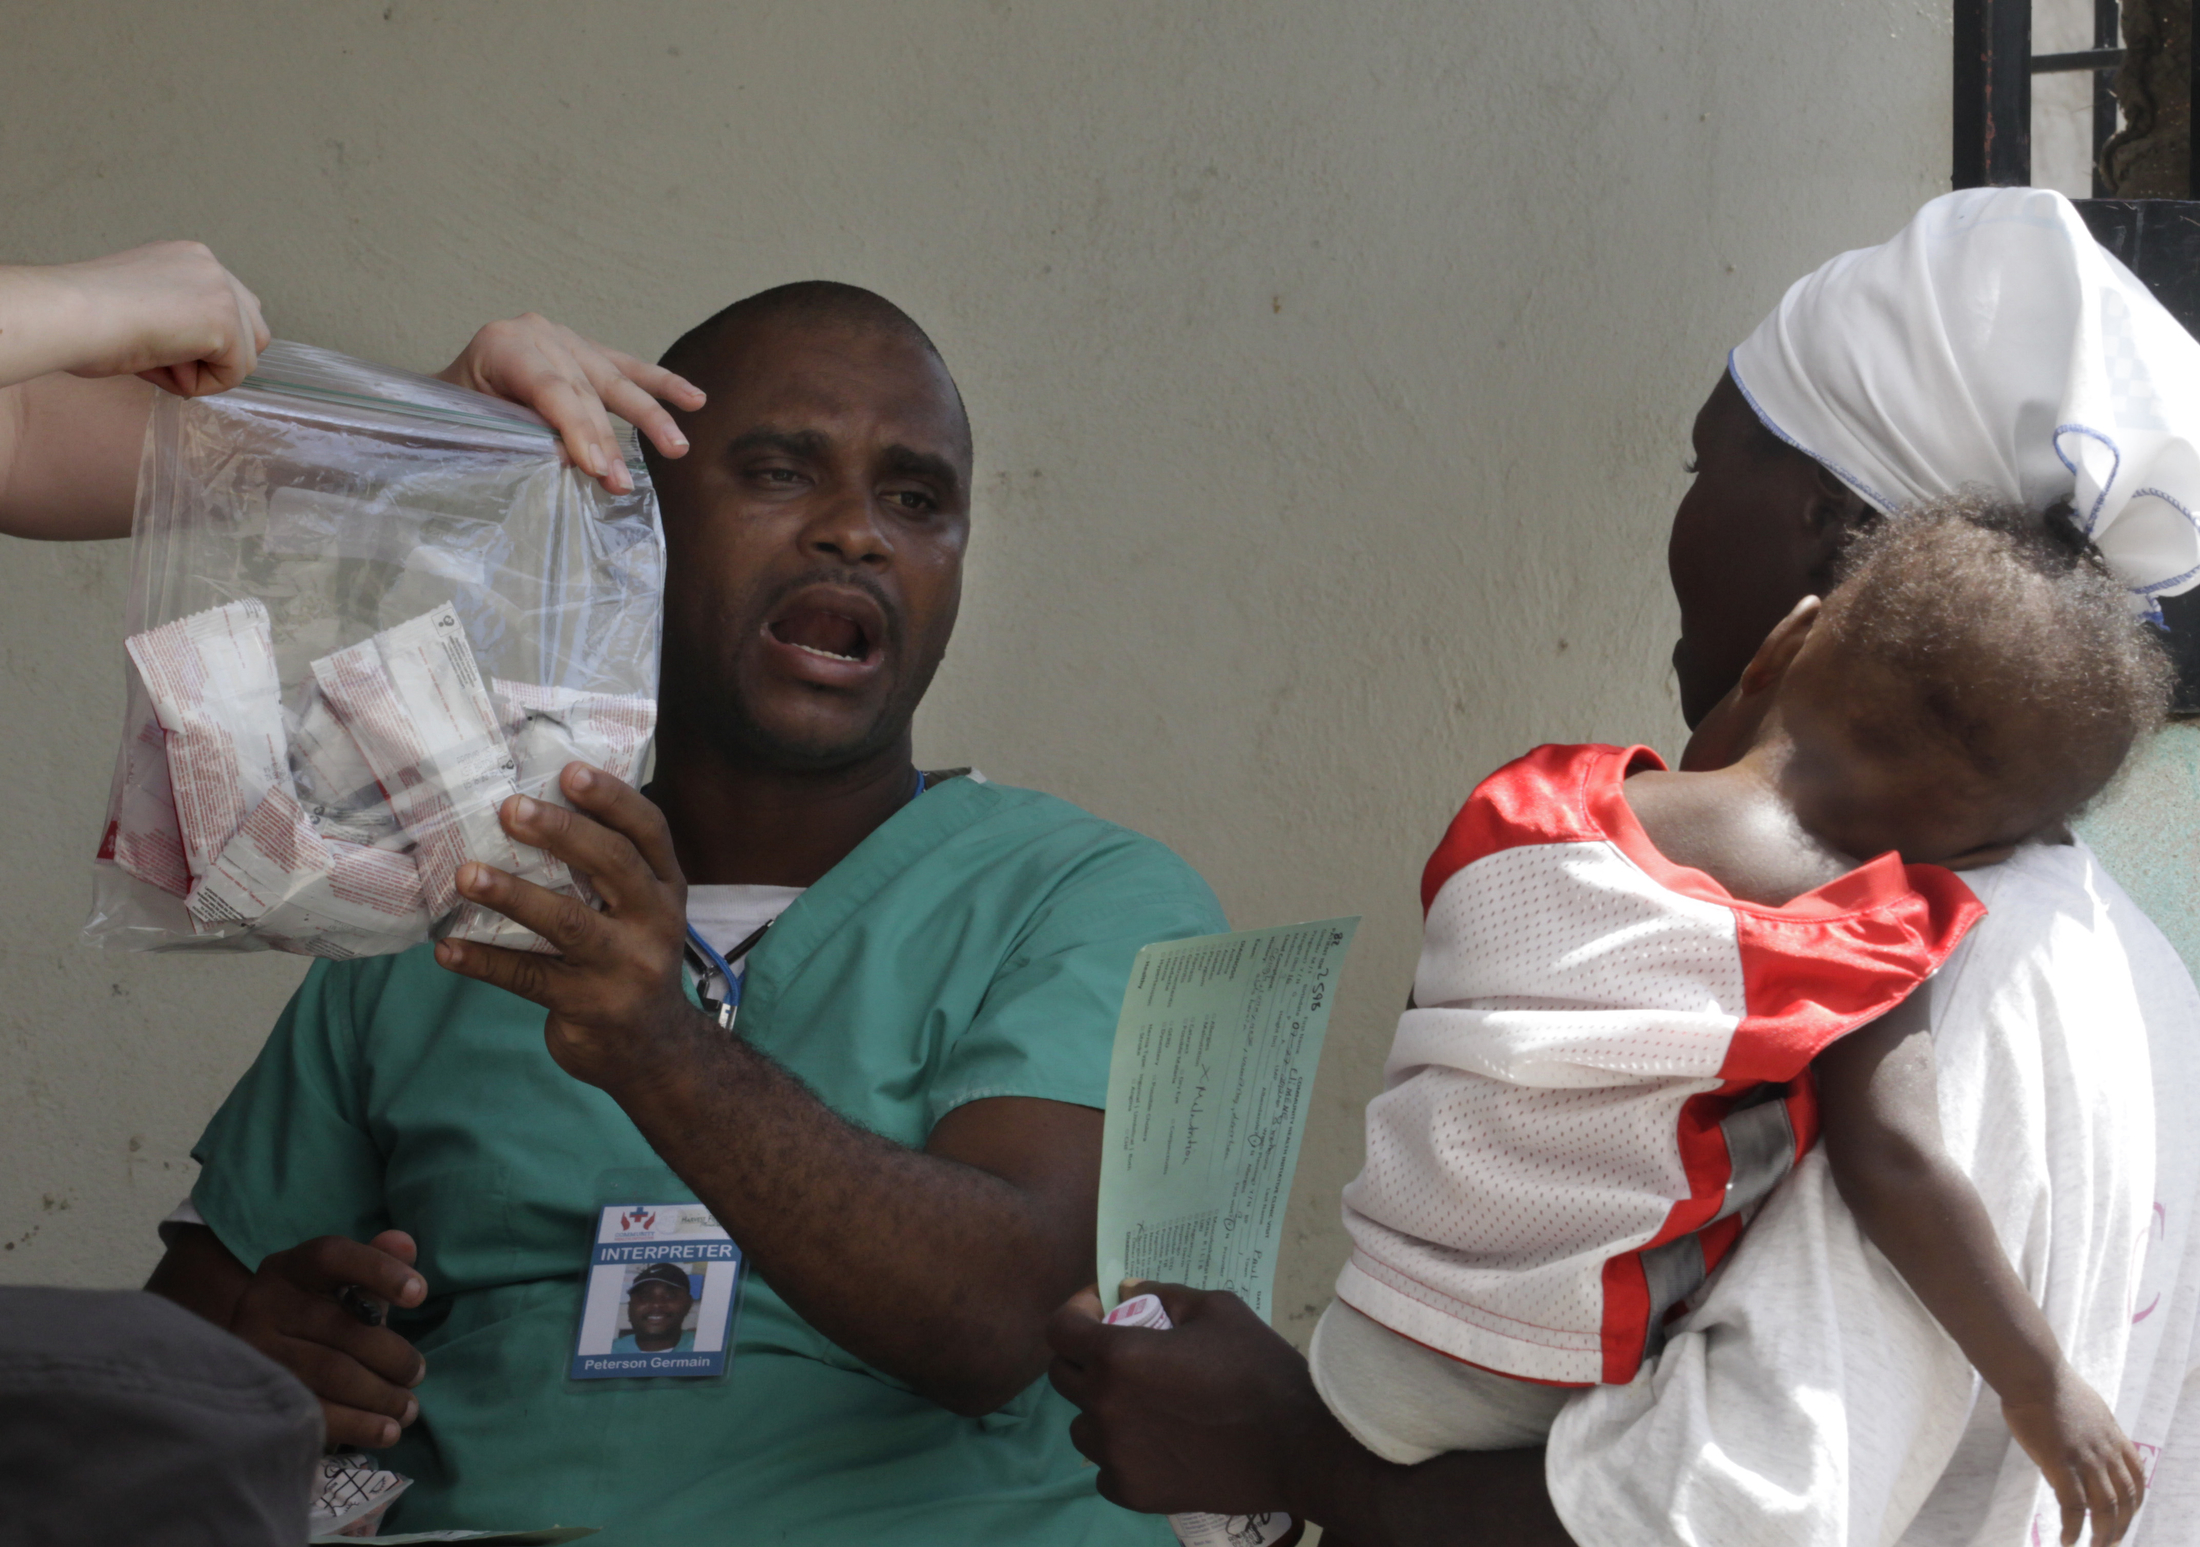 Haiti Widely Disparate Nations Both Struggle Pulitzer